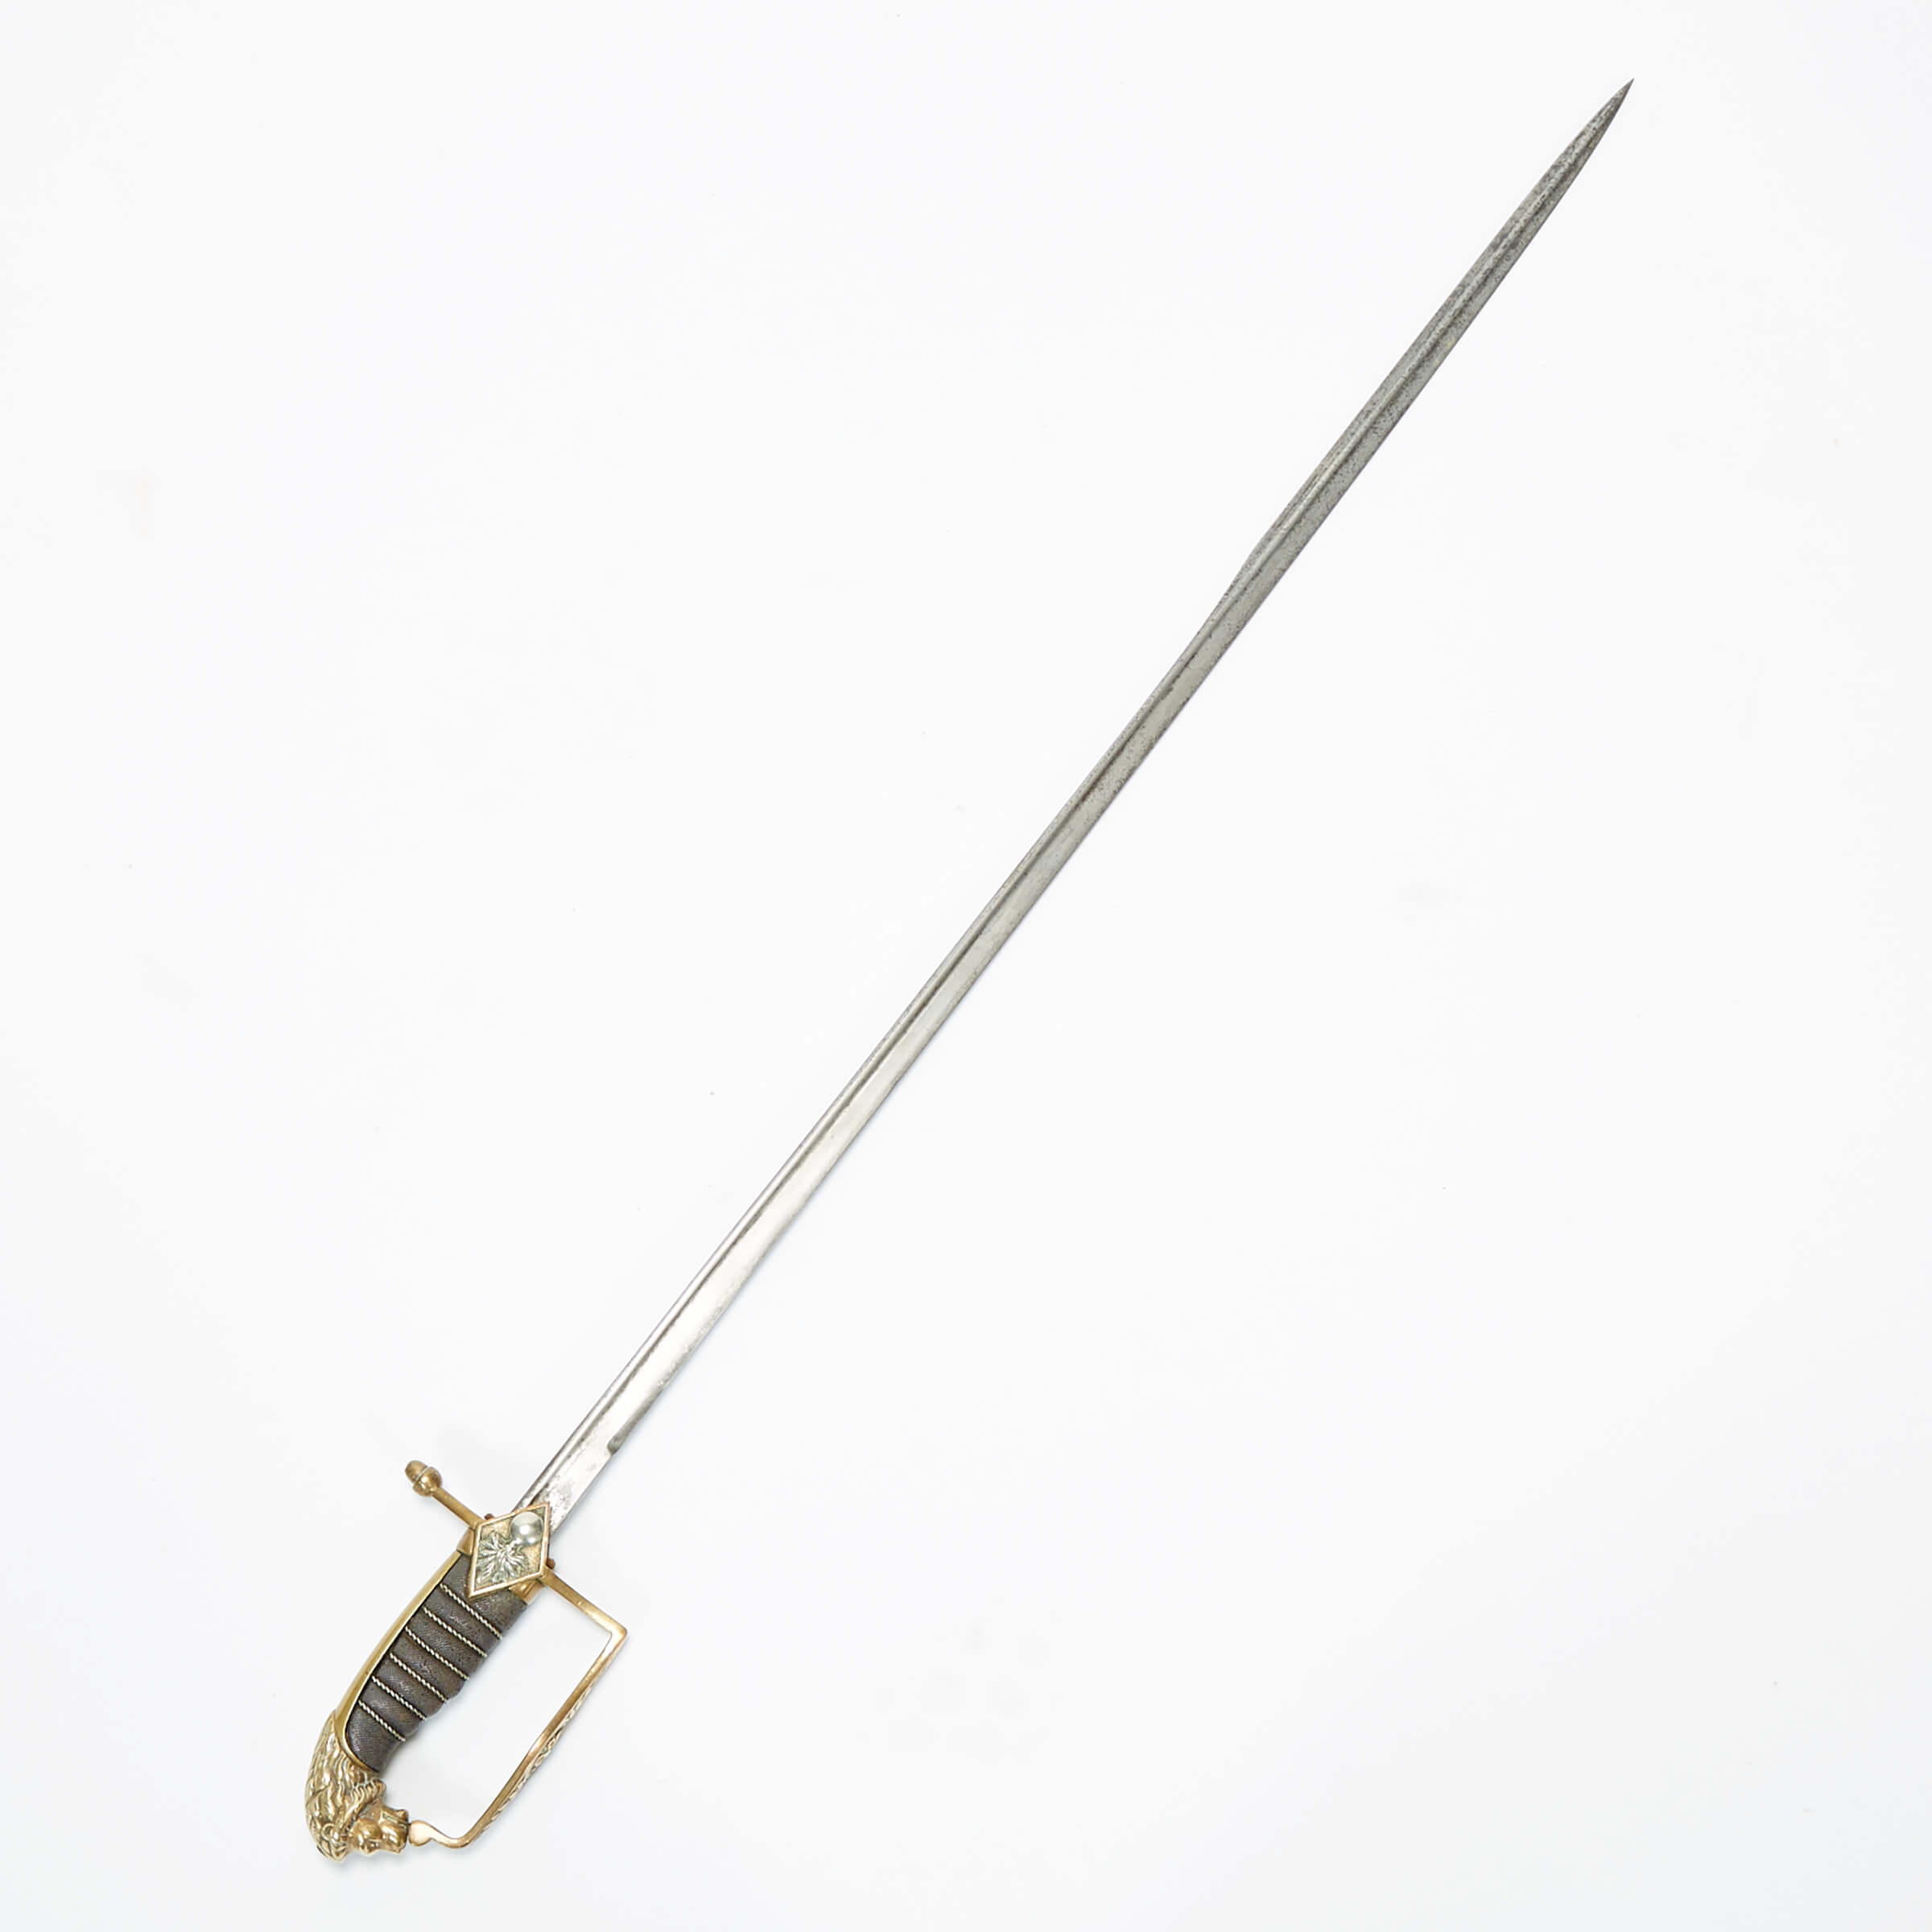 William III Dutch Grenadier Officer’s Sword, 19th century